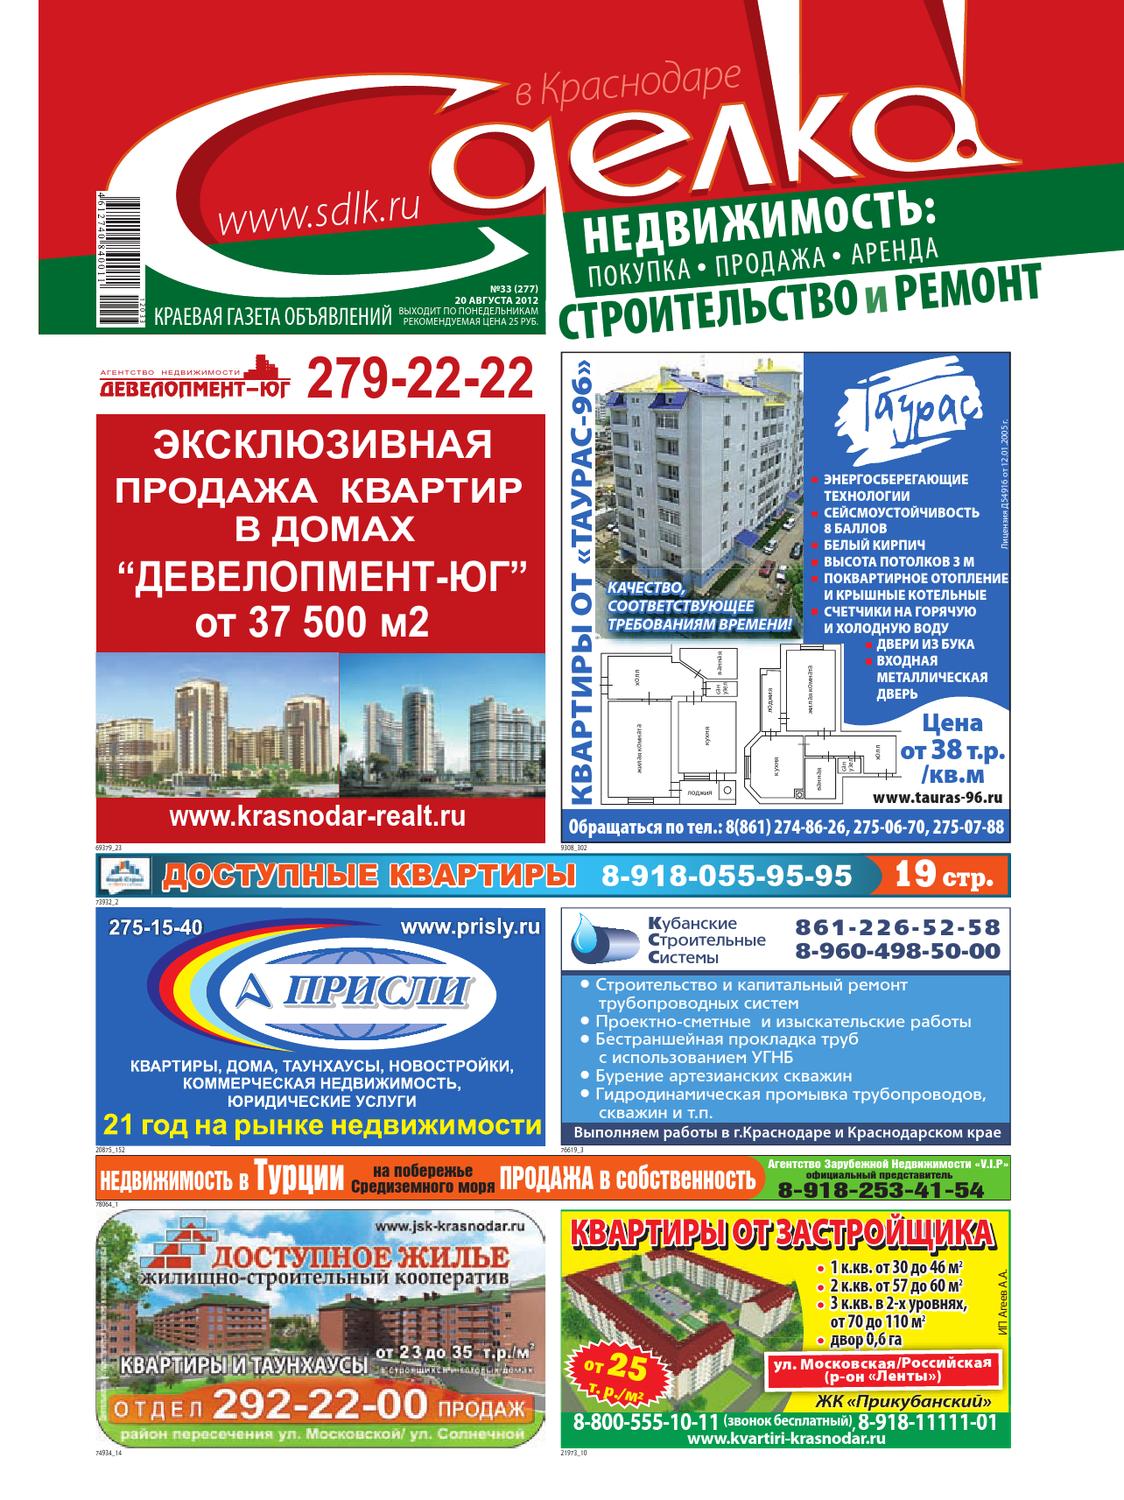 Сделка в Краснодаре №270, август 2012